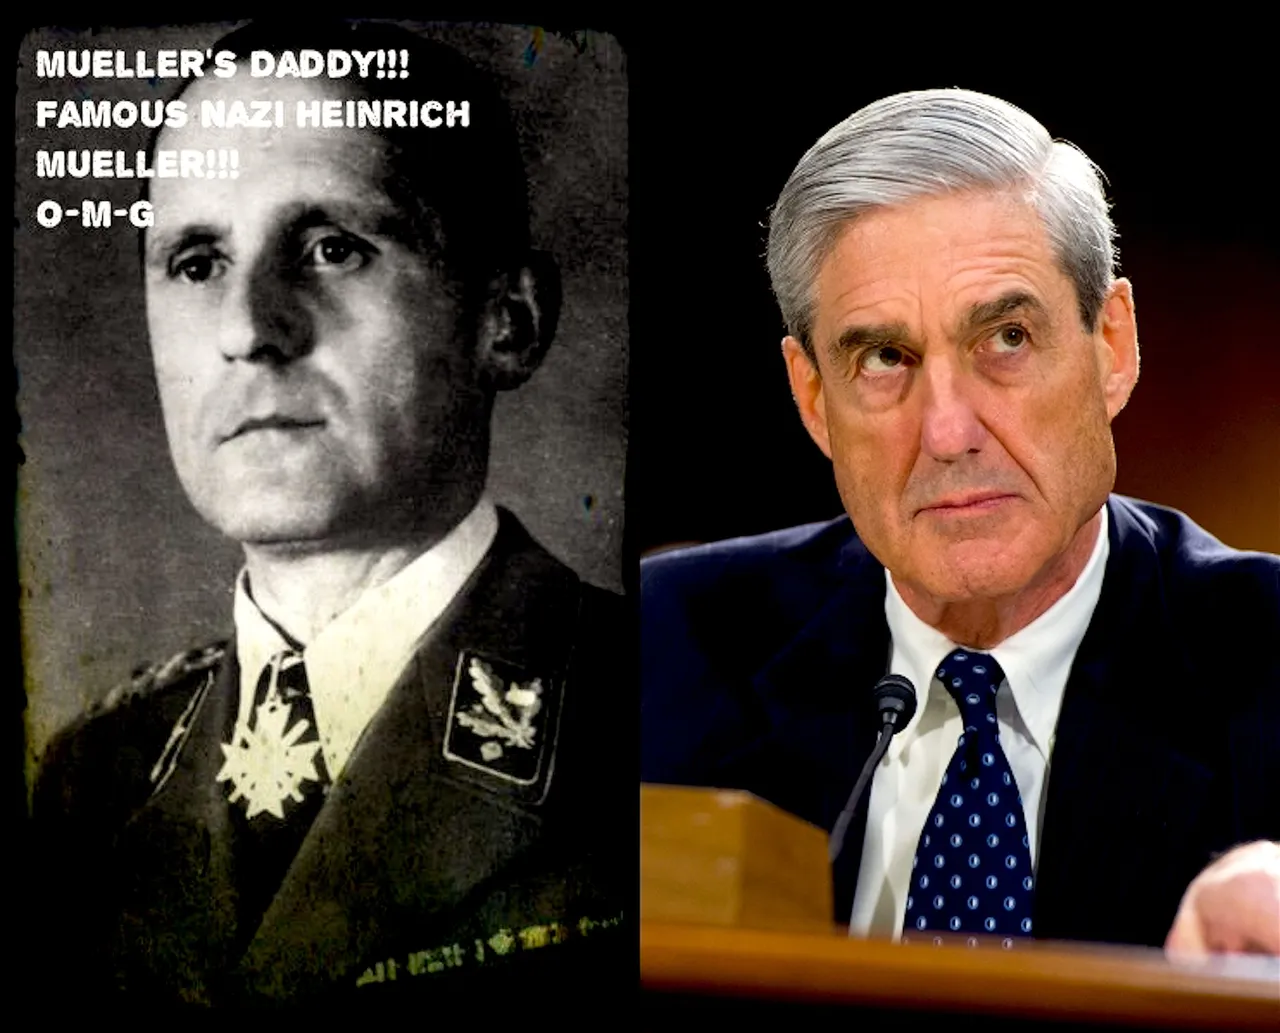 Muellers-daddy-Famous-nazi-Heinrich-Mueller-fot-Before-Its-News.jpg